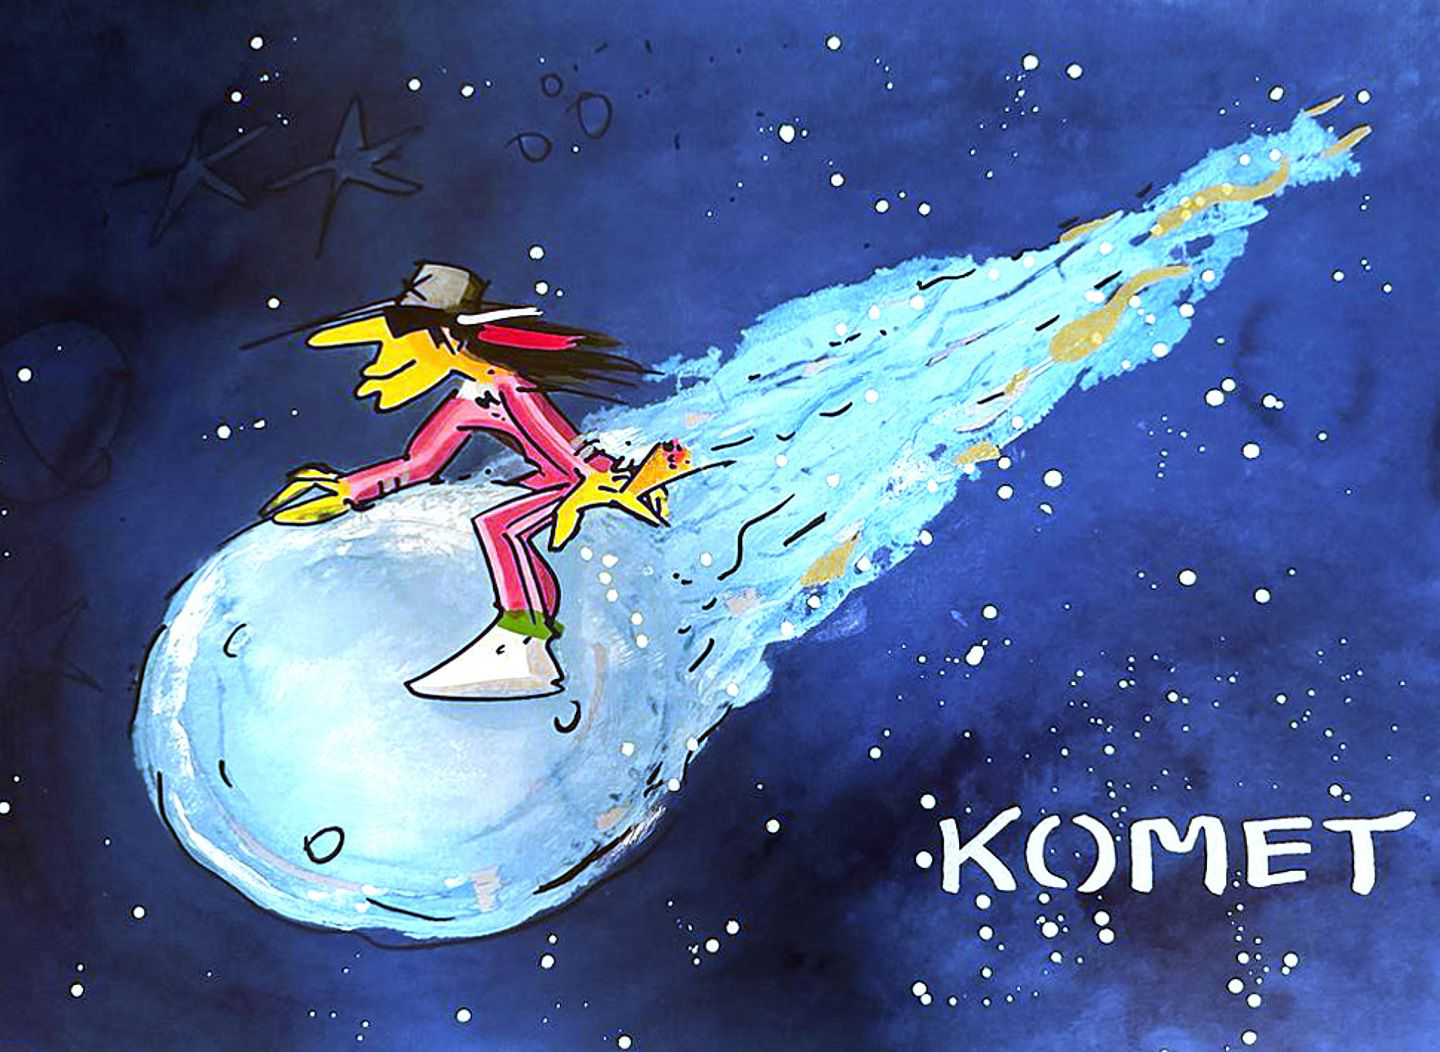 Udo Lindenberg "Komet - Midnight Edition"